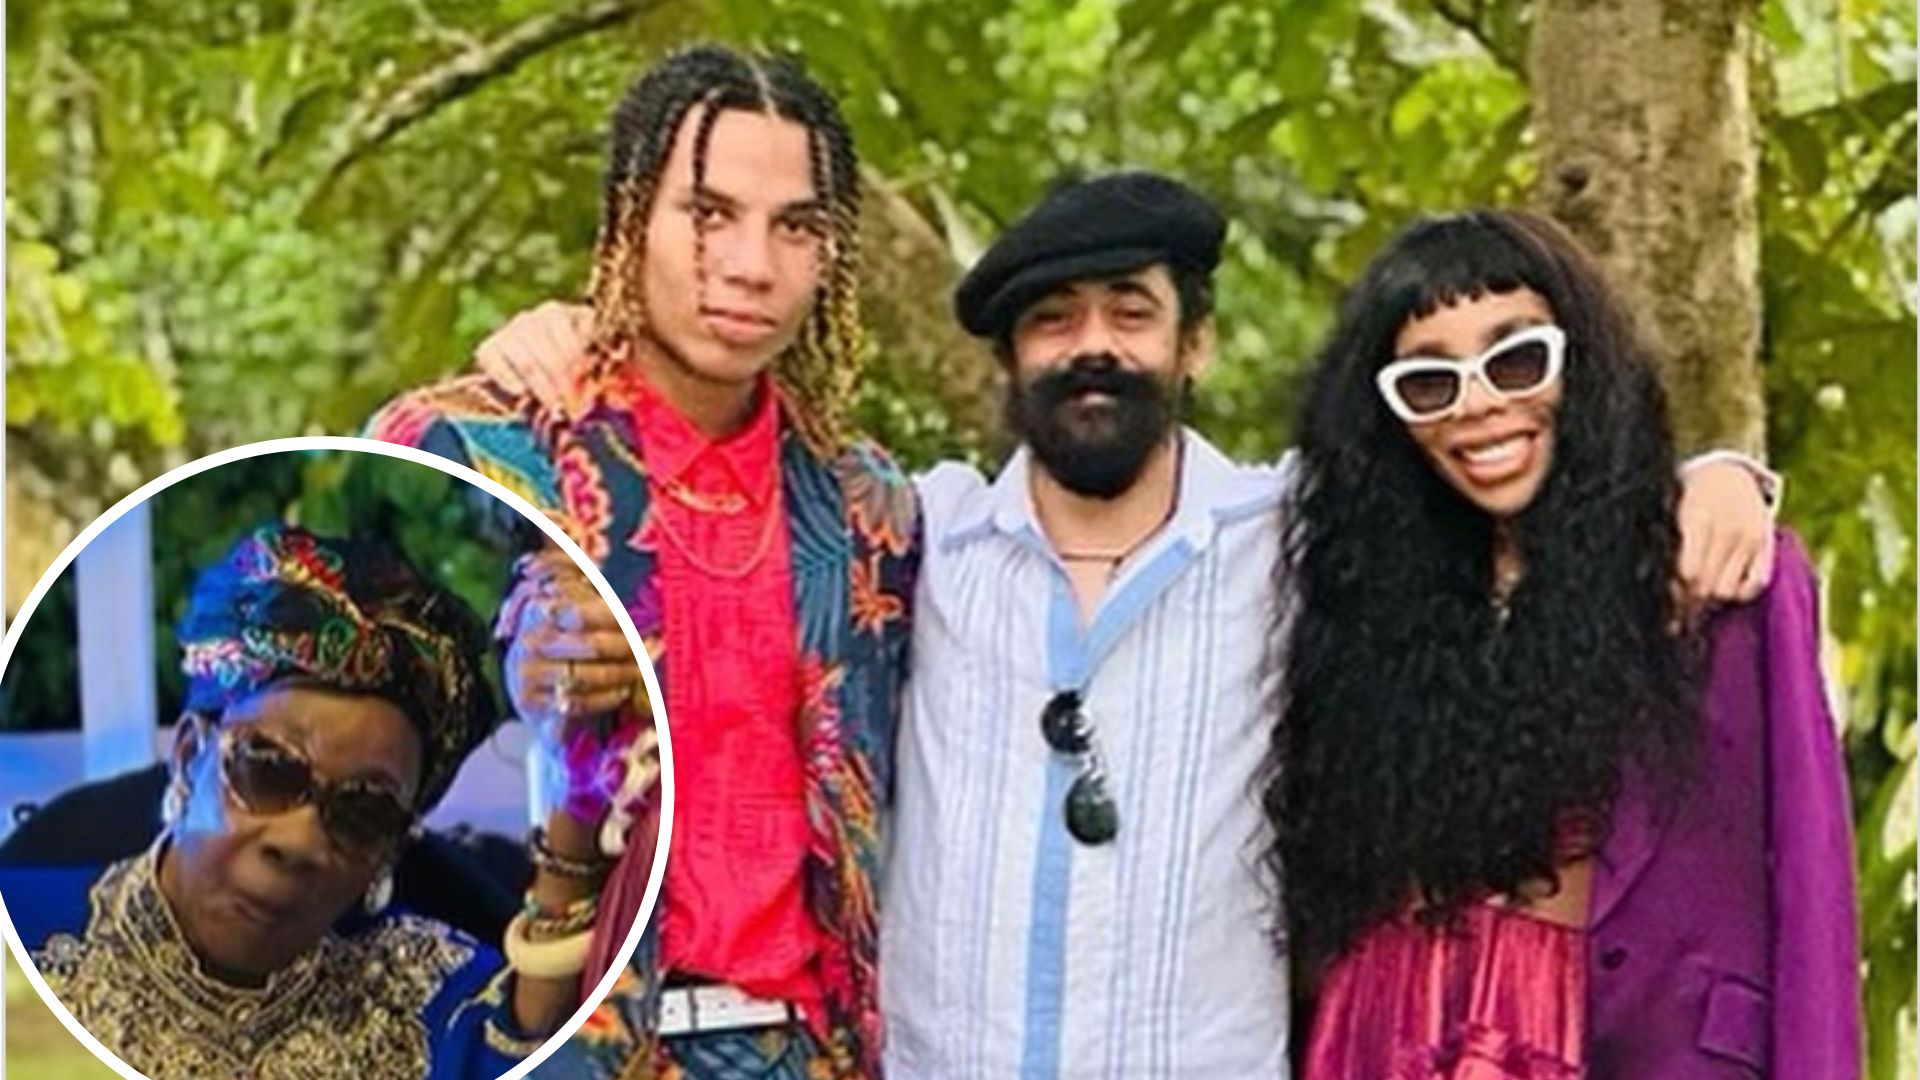 Rita, Cedella and Damian Marley in Jamaica